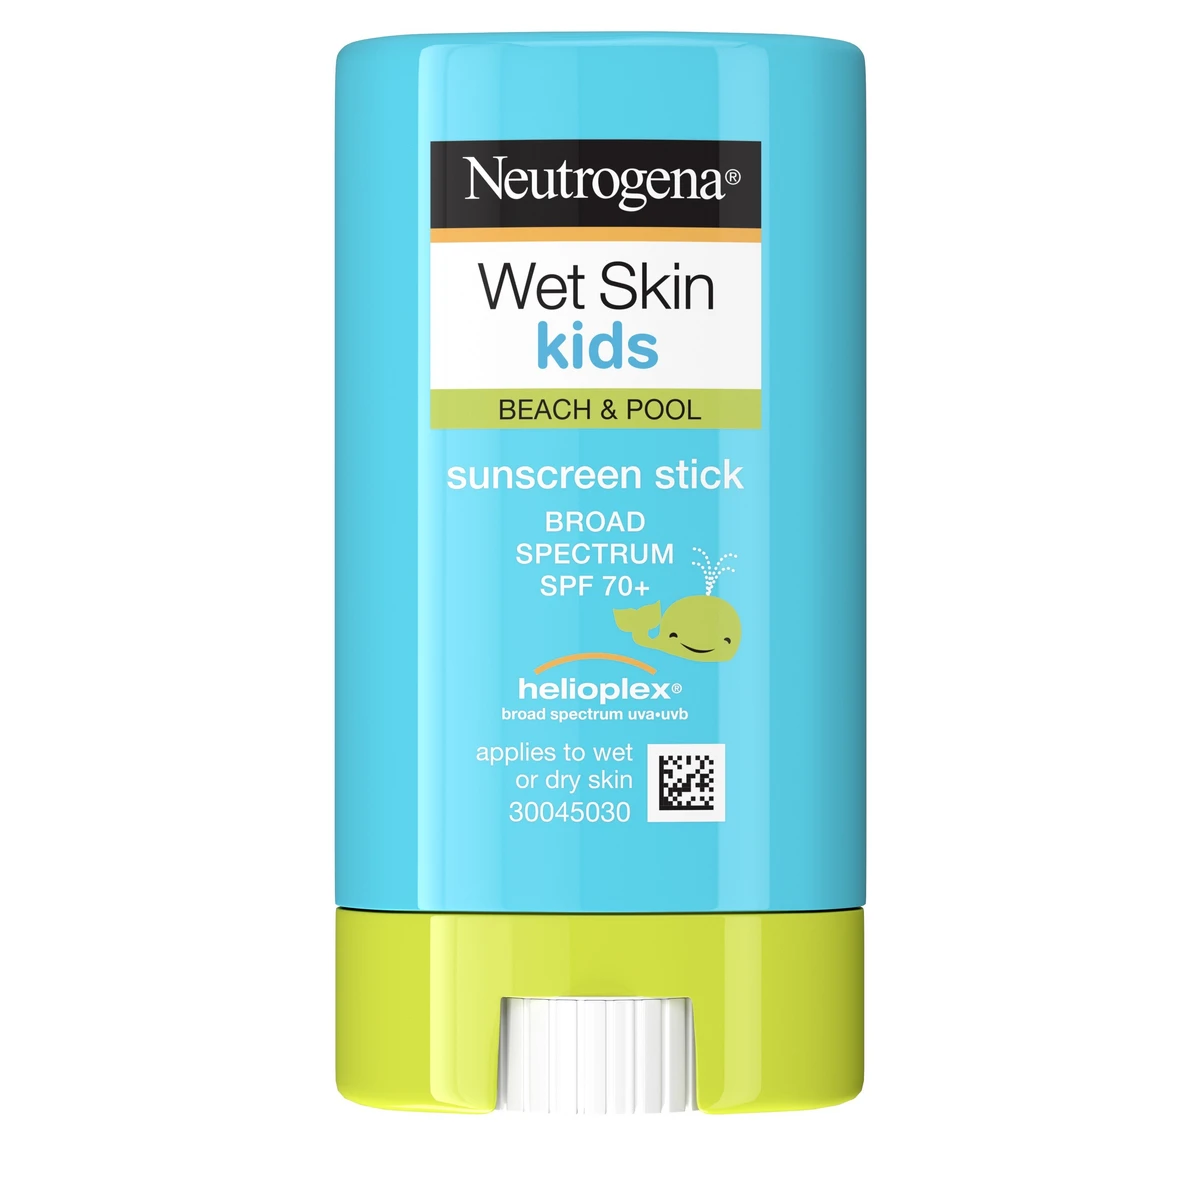 Neutrogena Wet Skin Kids Sunscreen Stick SPF 70 0.47oz